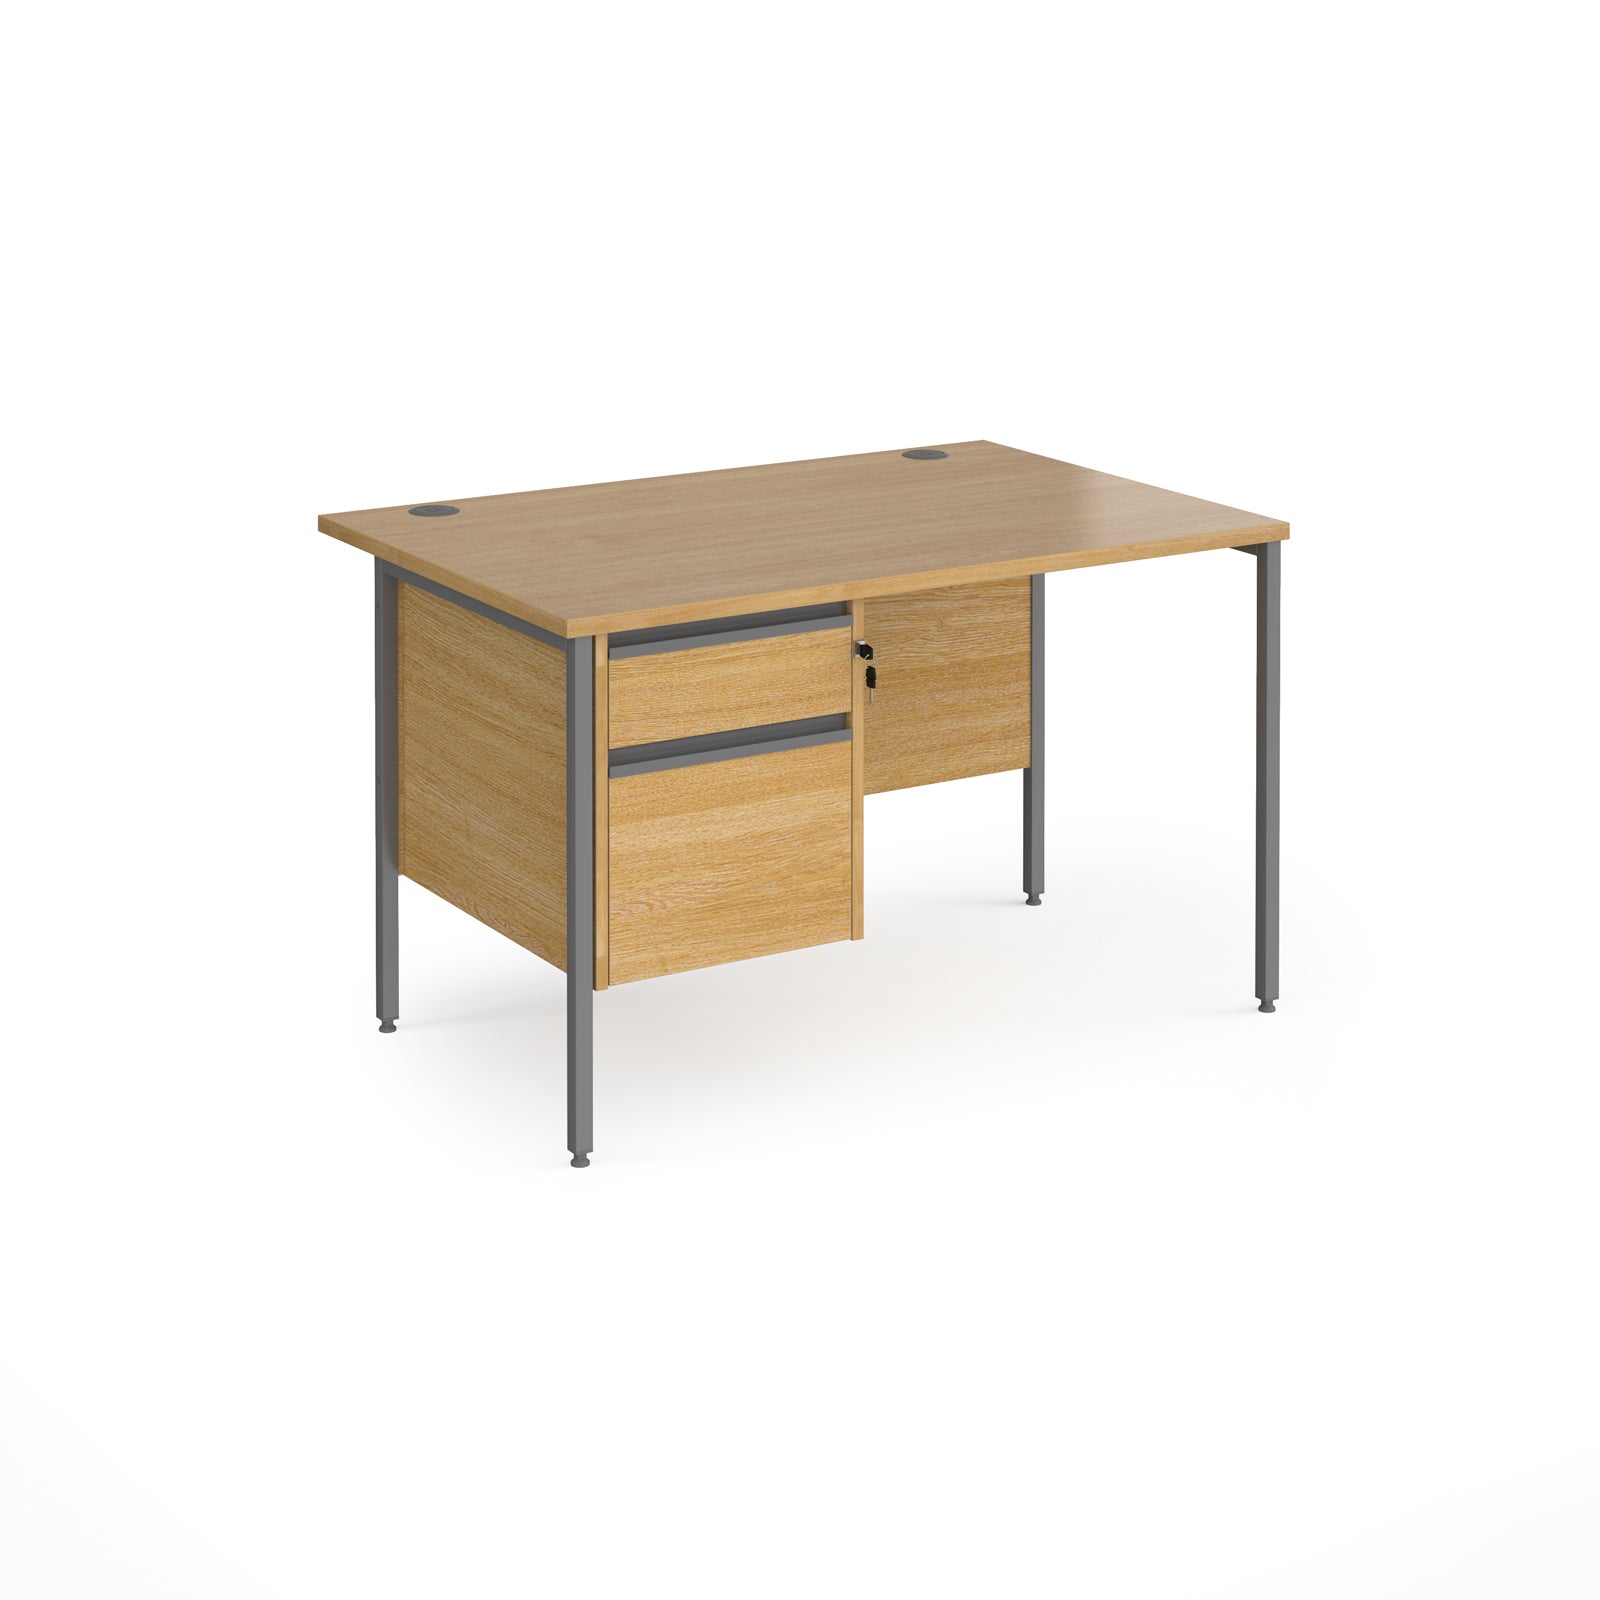 Chicago Desk with H-Frame Legs - 2 Drawer Pedestal